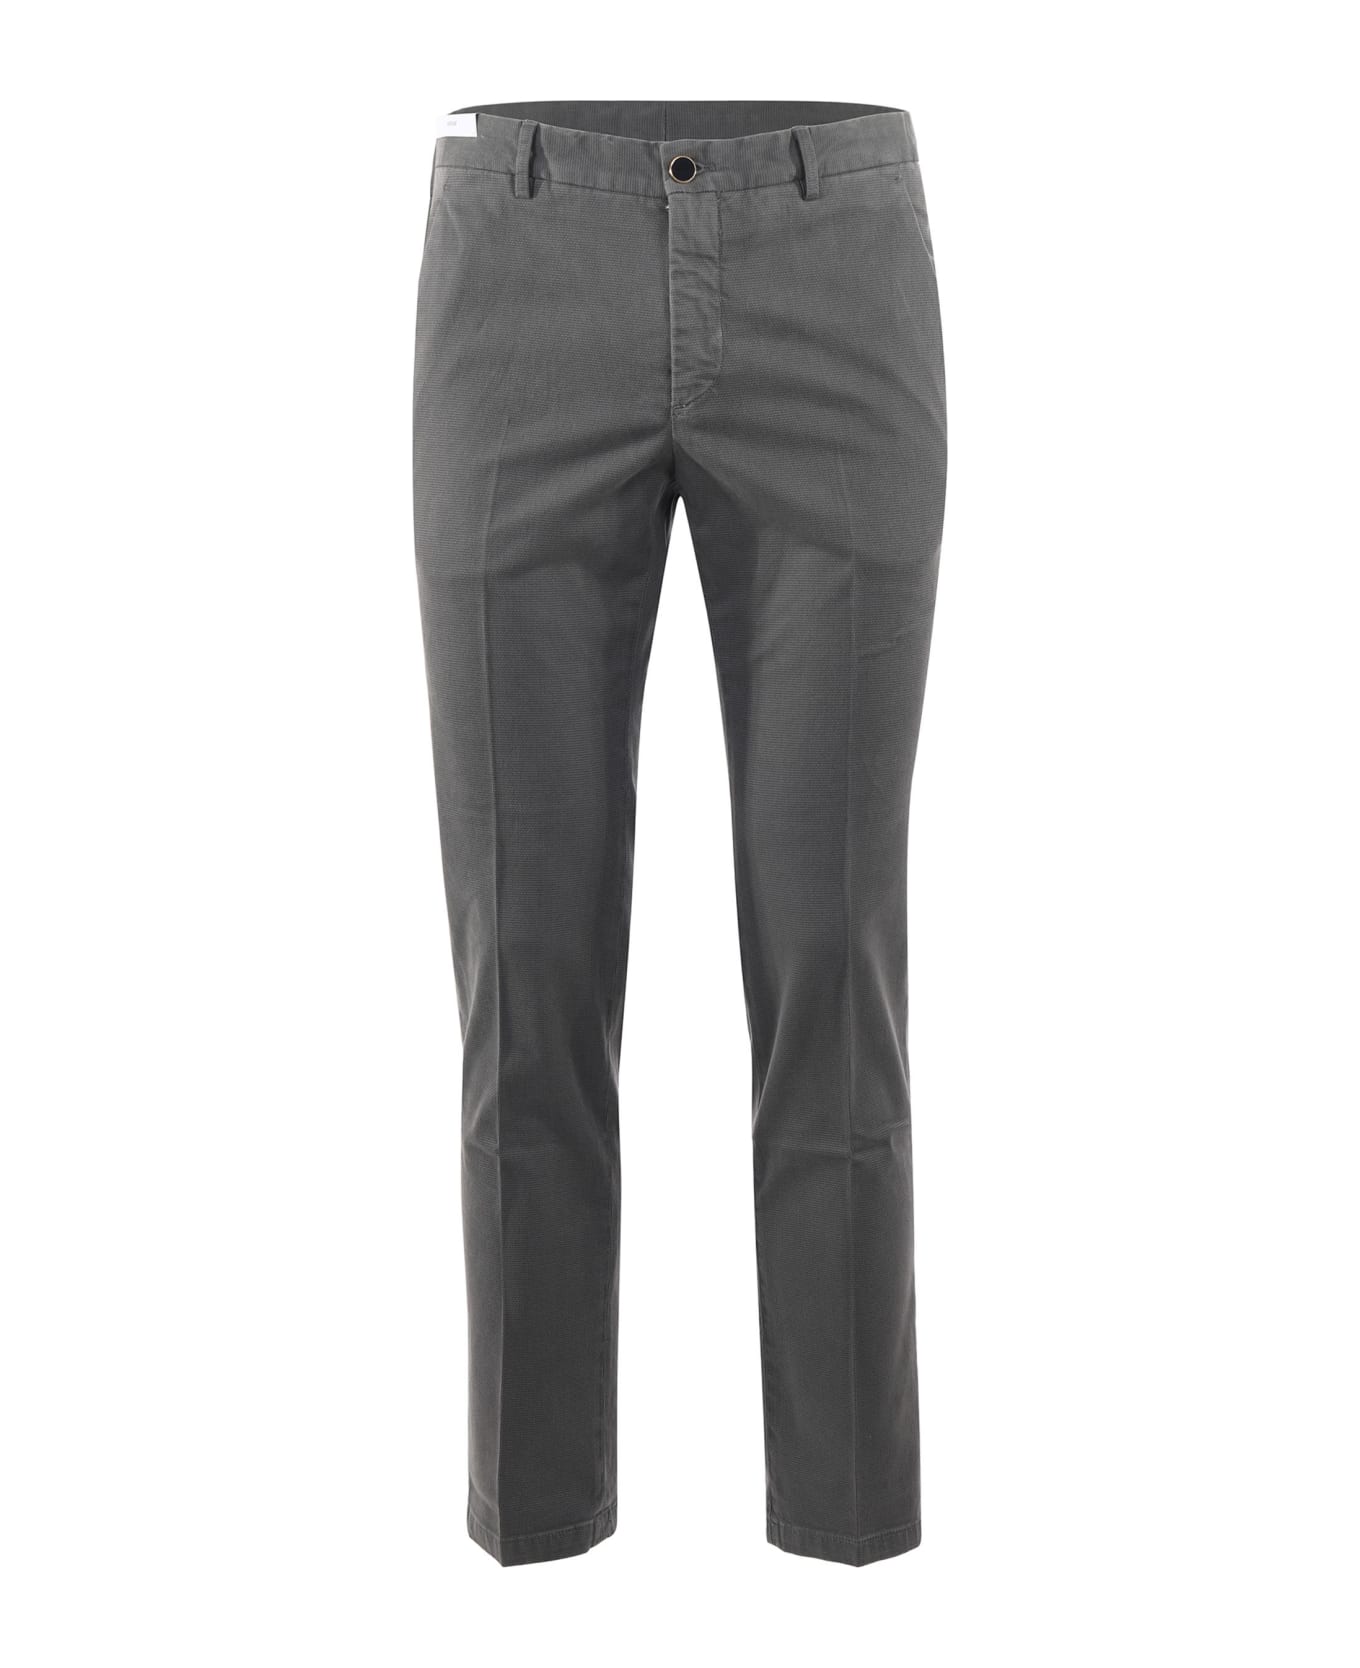 PT Torino Pt01 Trousers In Micro Patterned Stretch Cotton - Grigio scuro